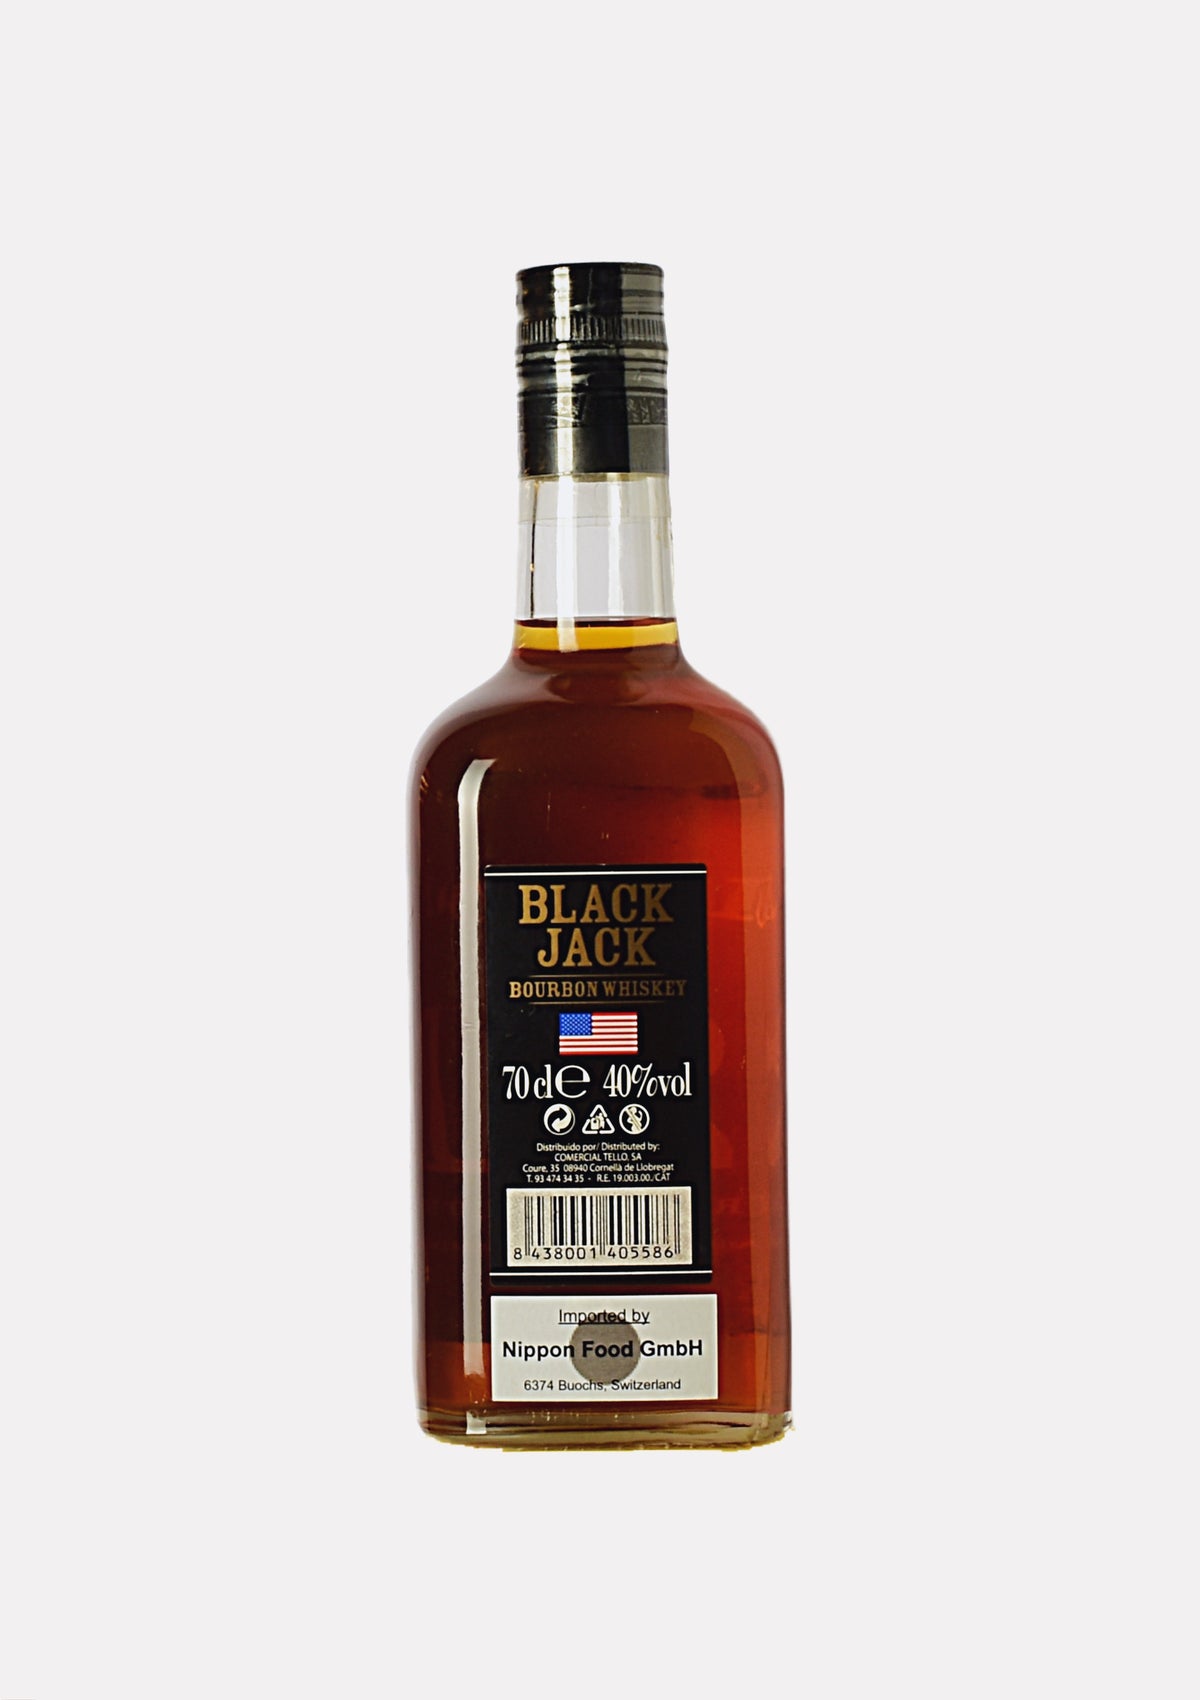 Black Jack 21 Bourbon Whiskey